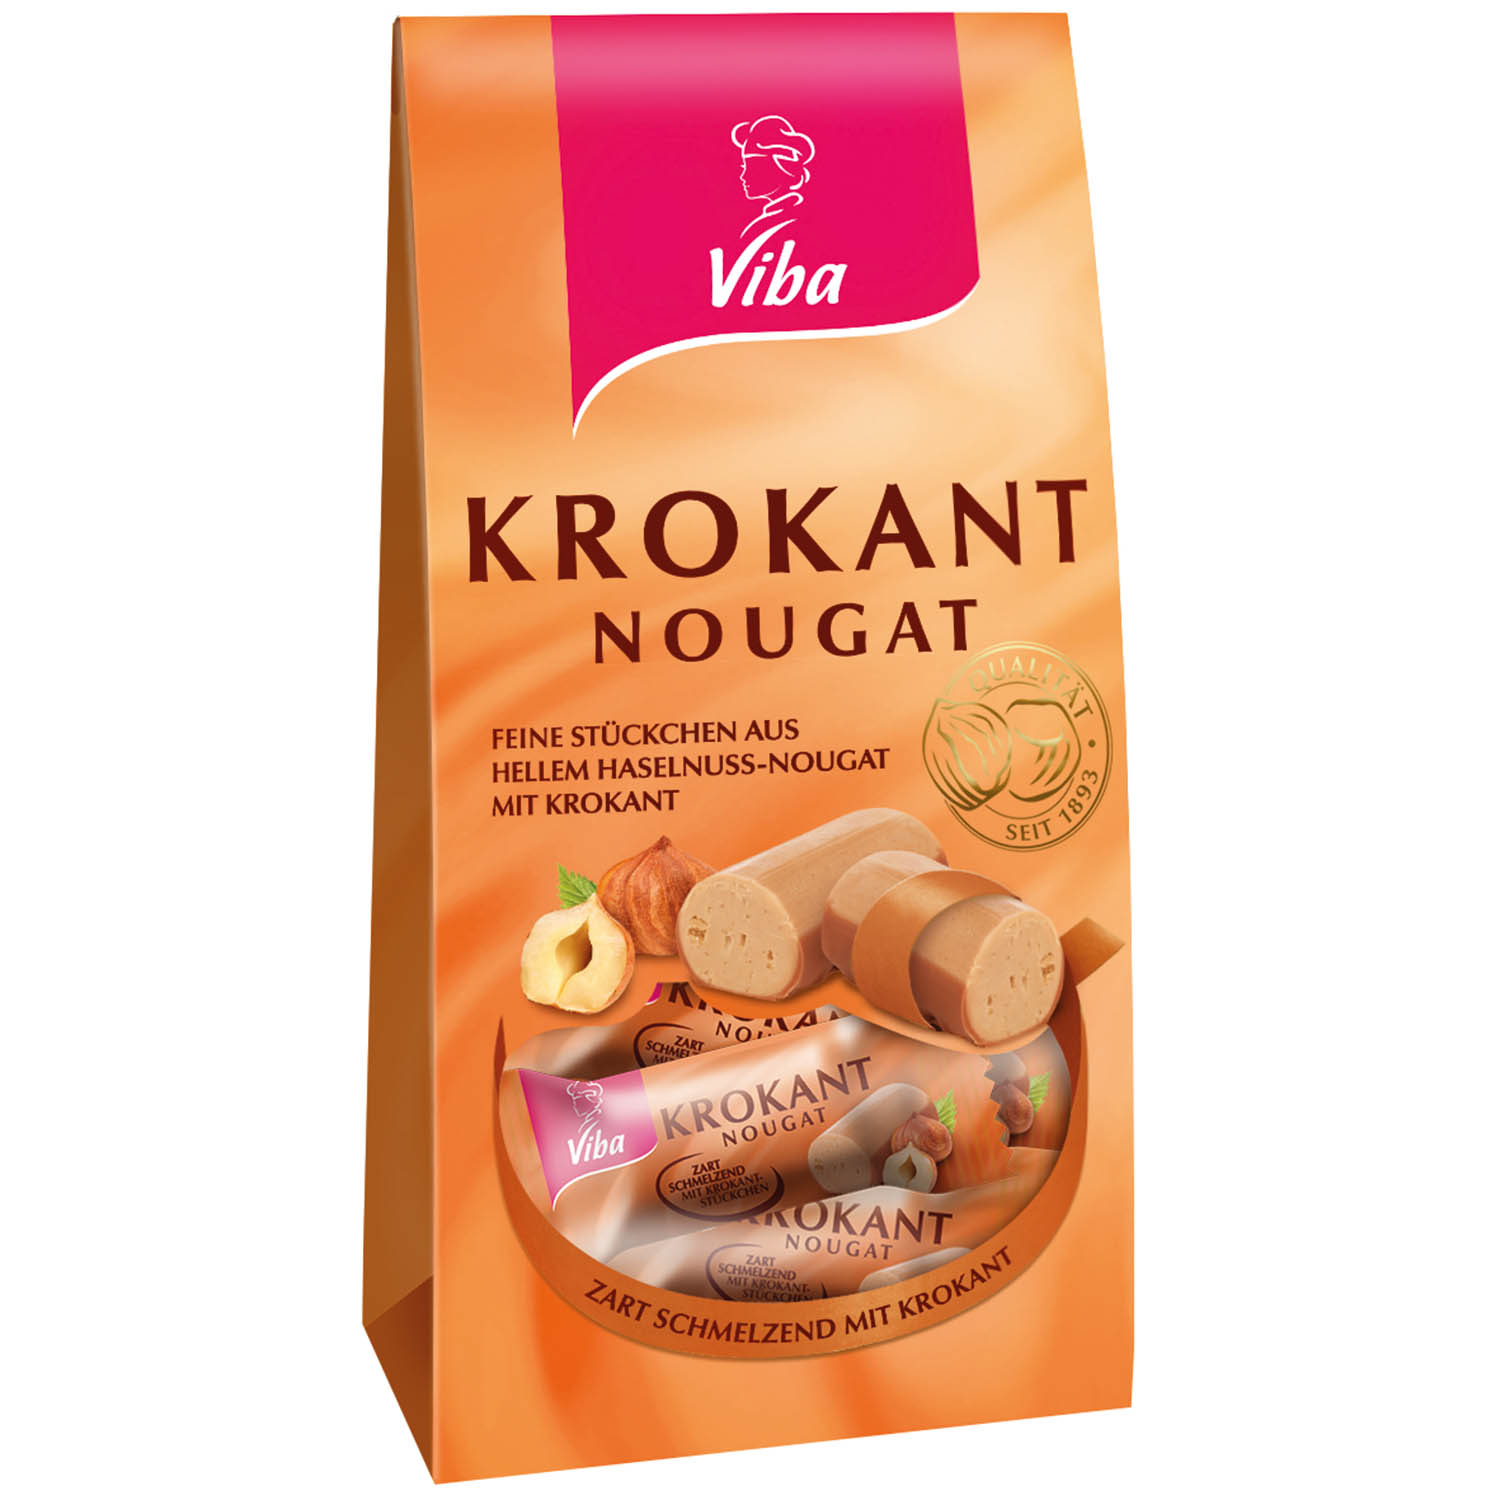 Viba Nougat Krokant Minis 120g | Online kaufen im World of Sweets Shop